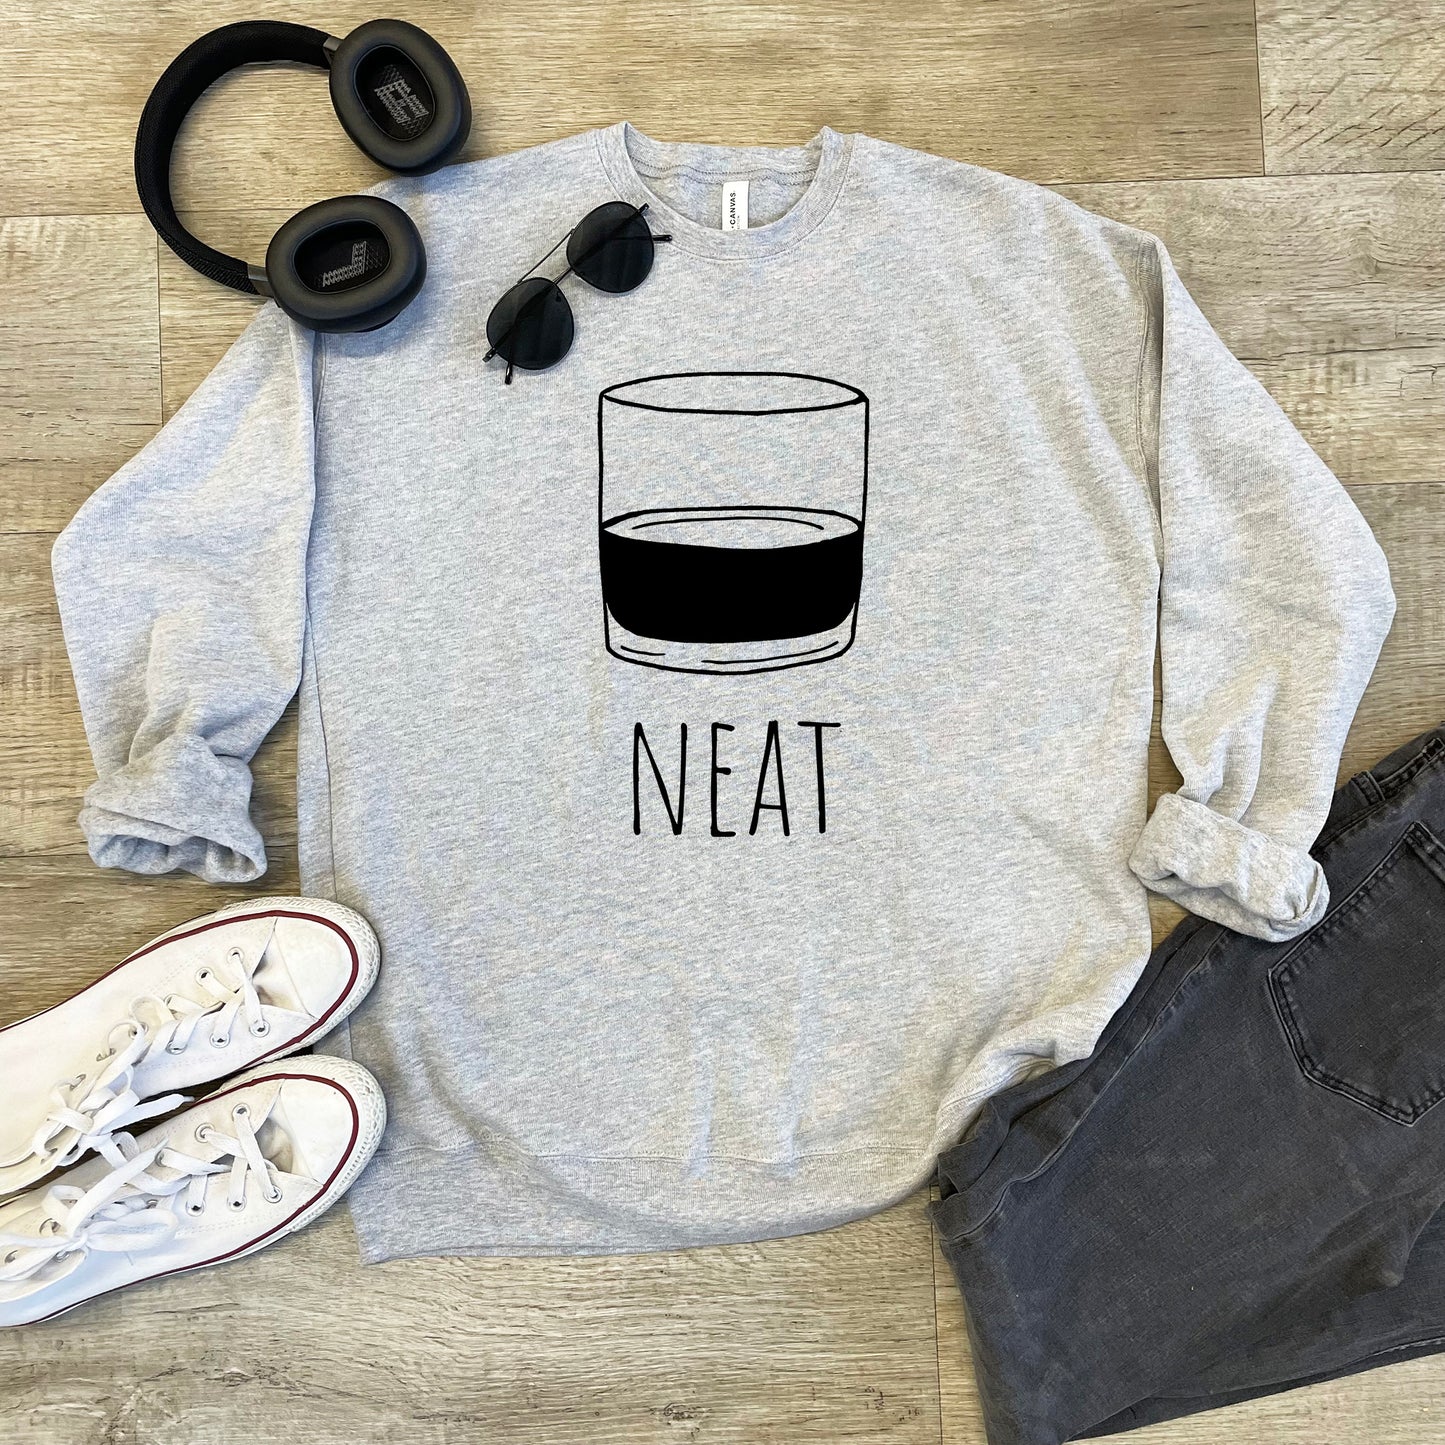 Neat (Whiskey) - Unisex Sweatshirt - Heather Gray or Dusty Blue